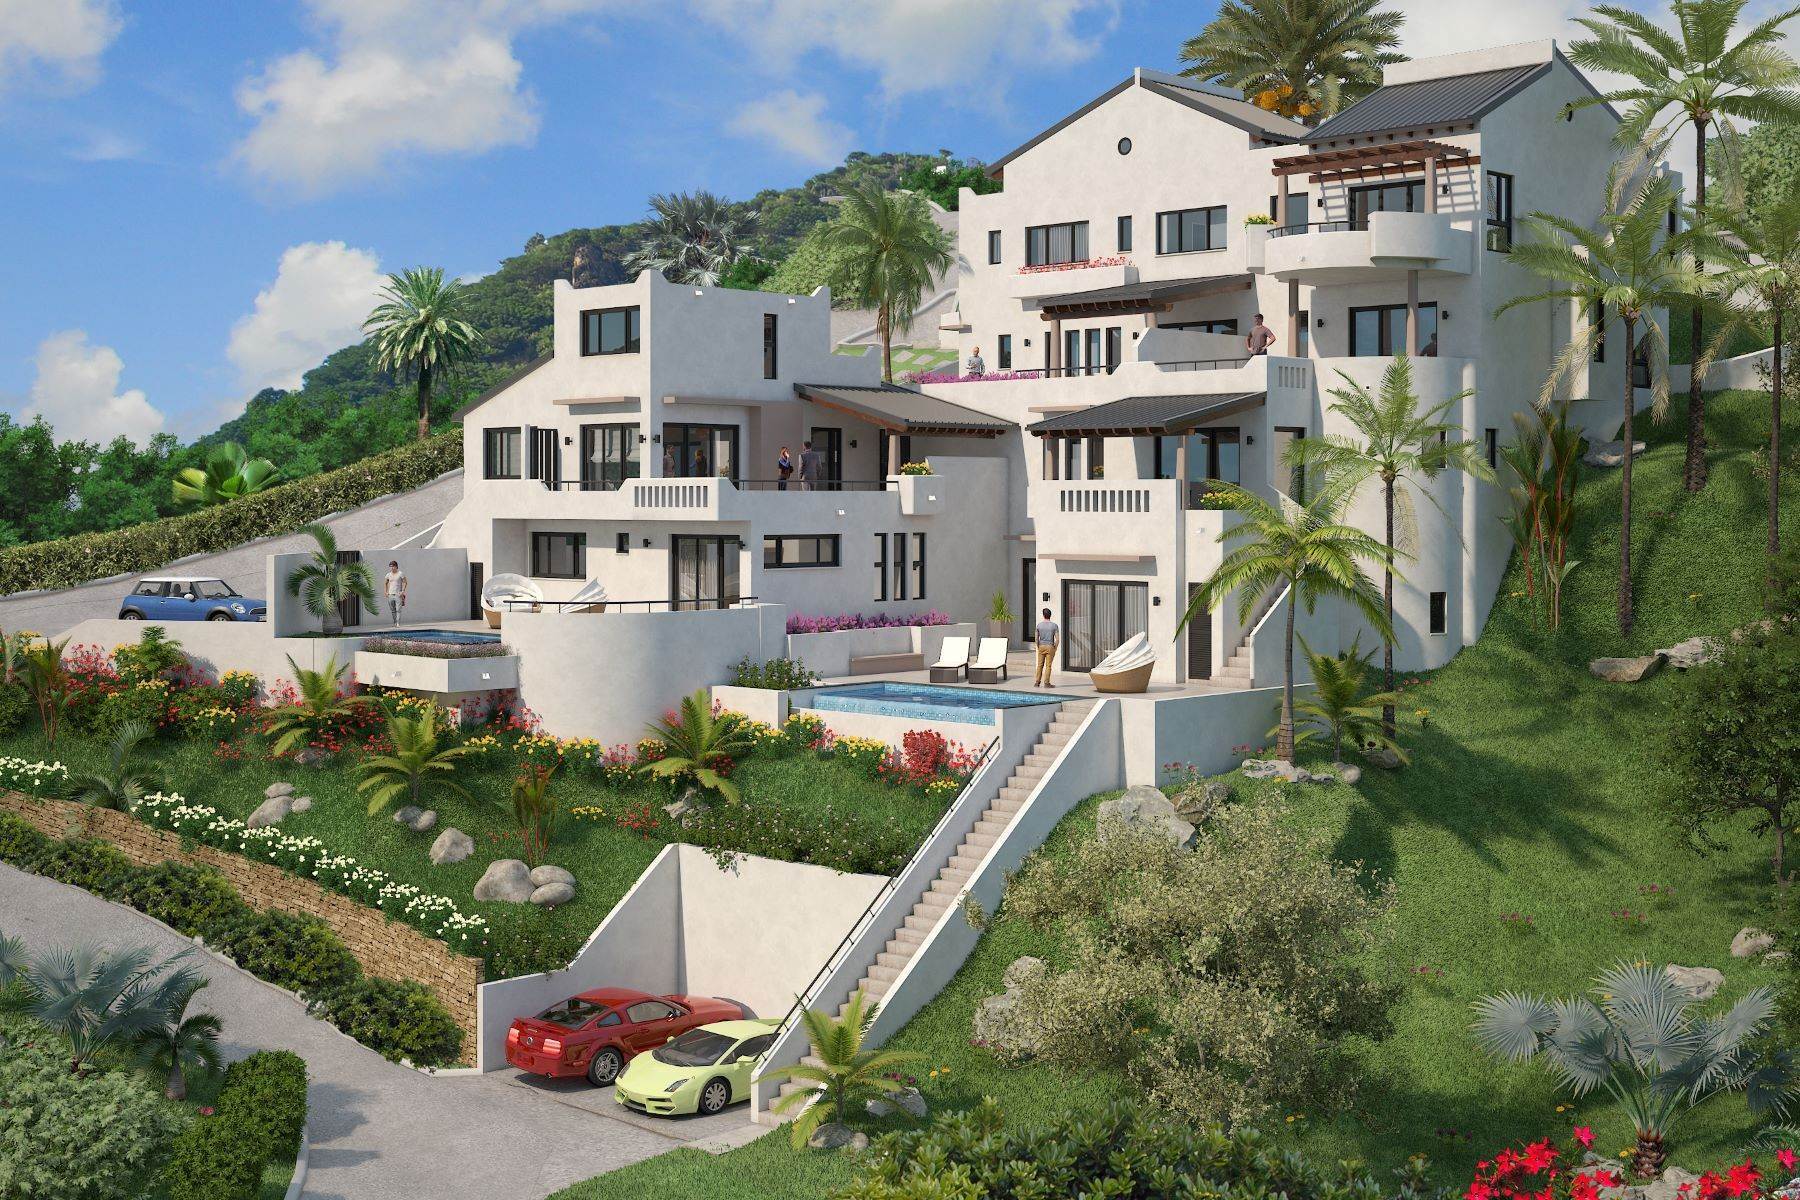 Apartments for Sale at Solea Little Bay #1 Belair, St. Maarten